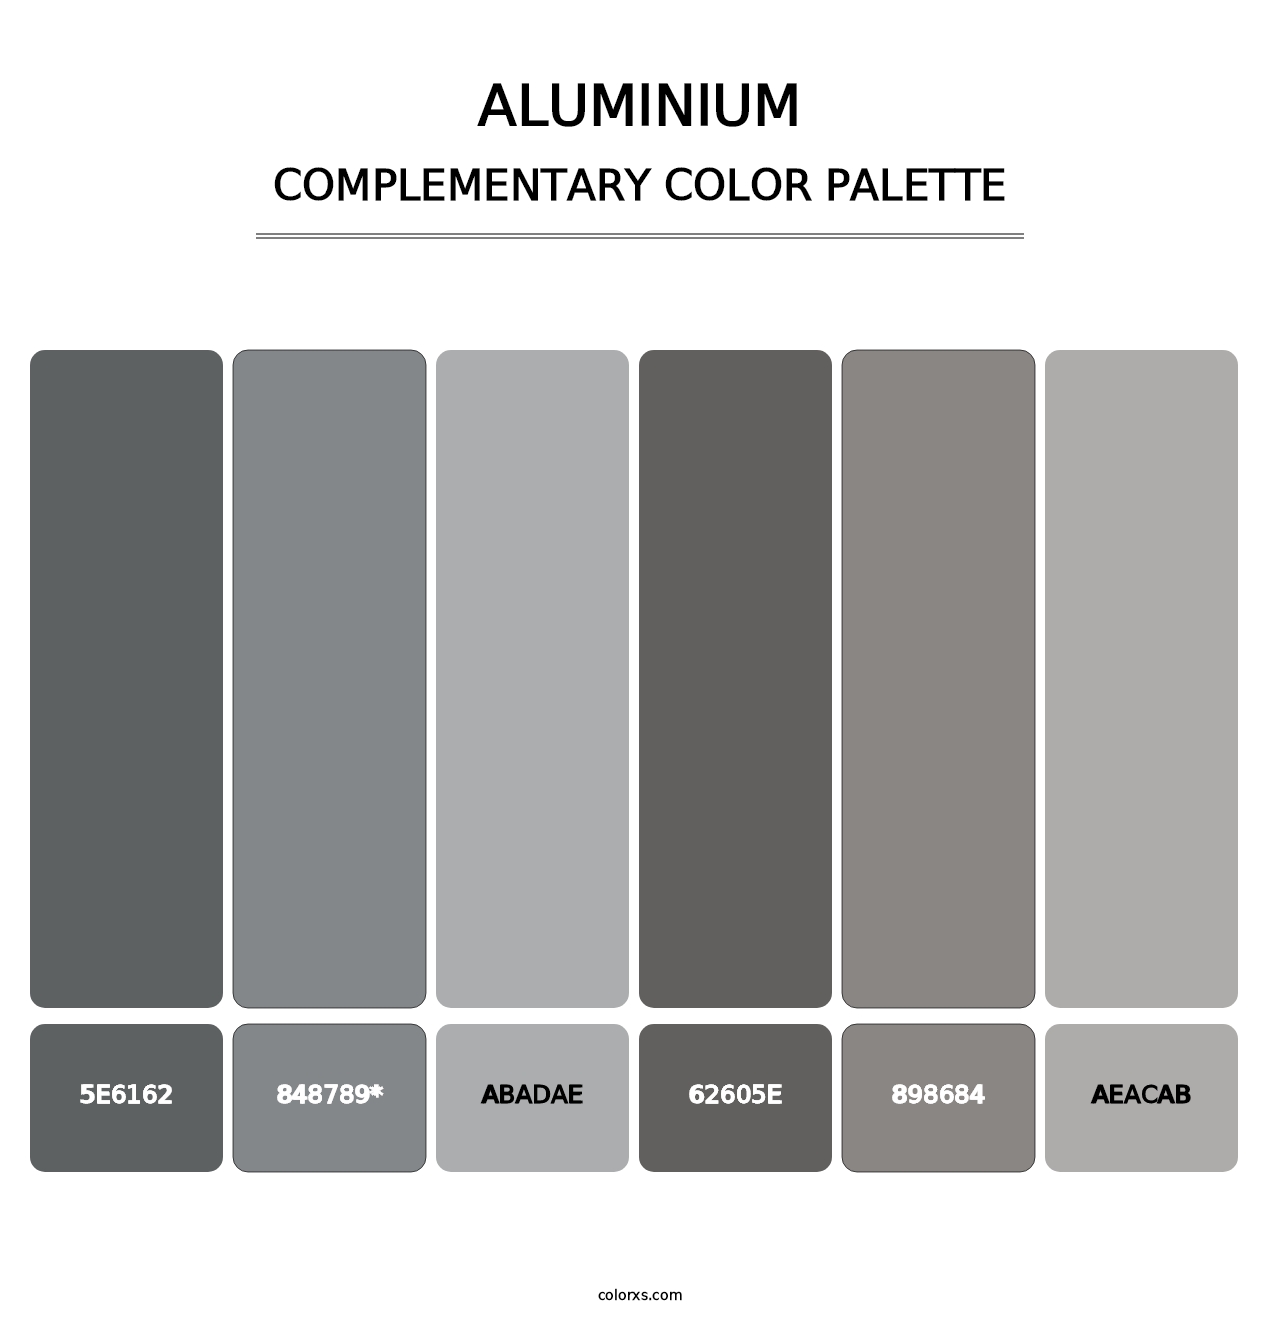 Aluminium - Complementary Color Palette